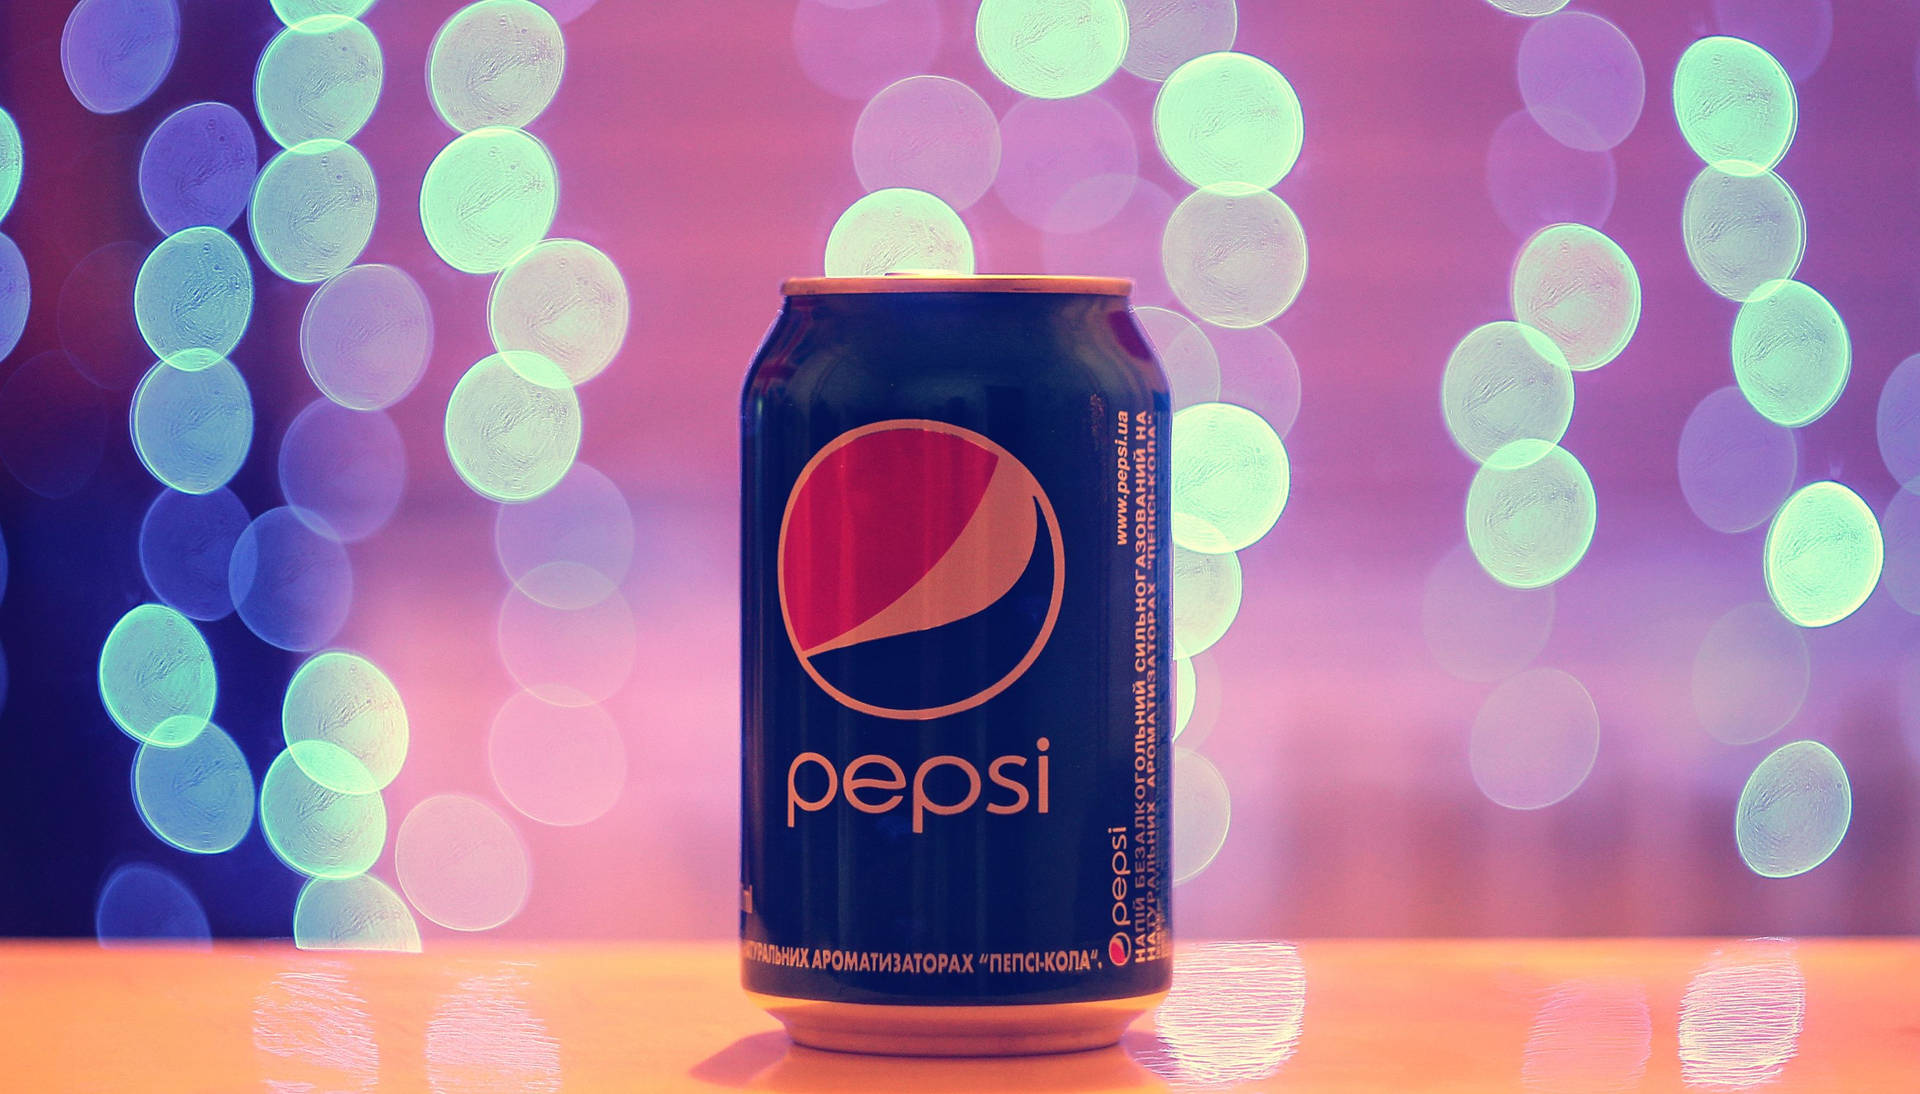 Pepsi Drink Products Endorsement Bokeh Lights Wallpaper